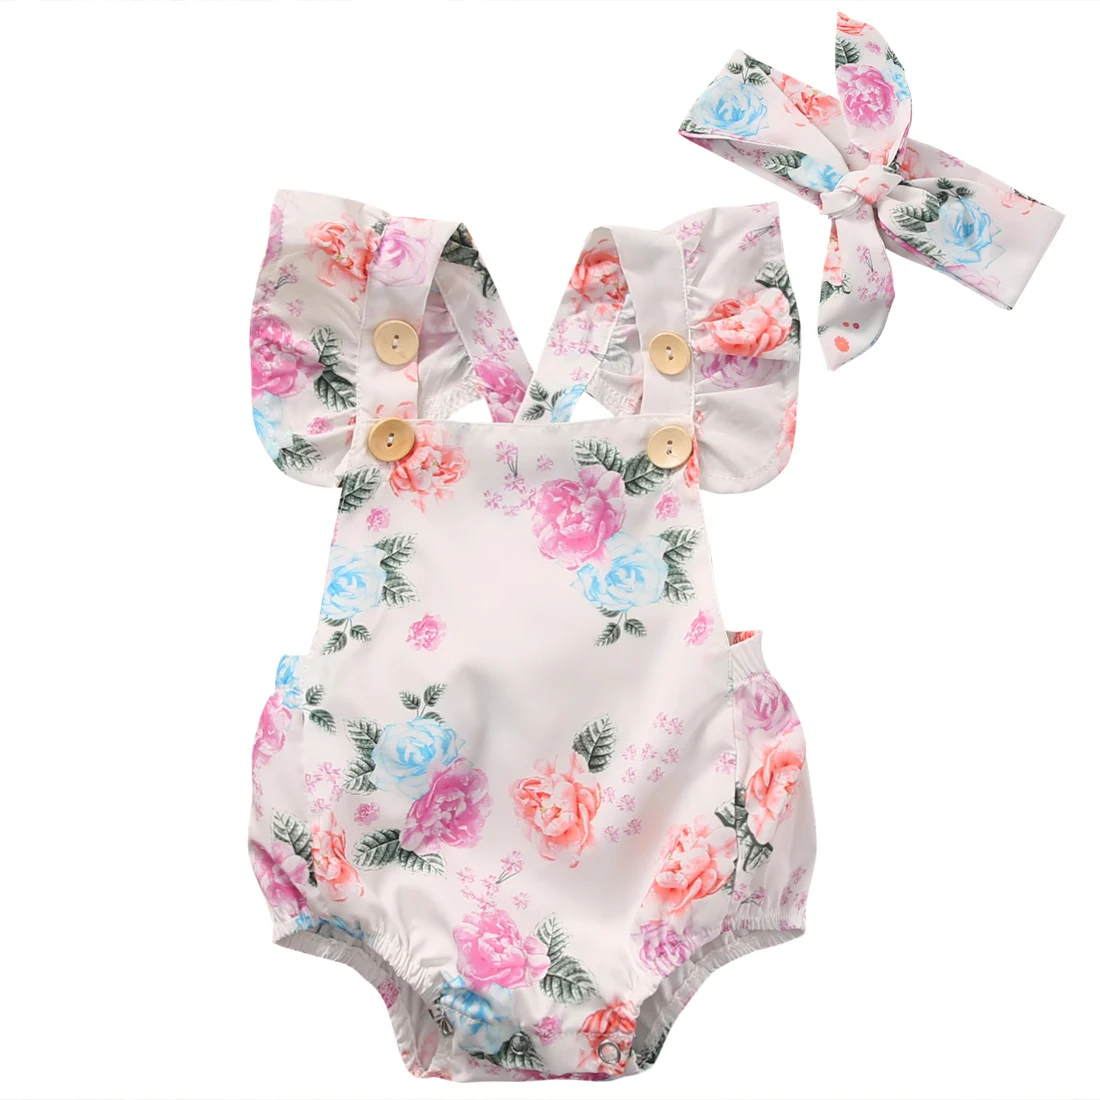 Newborn Baby Boys Girls Floral Romper Bodysuit Jumpsuit+Headband Set Outfit HOT